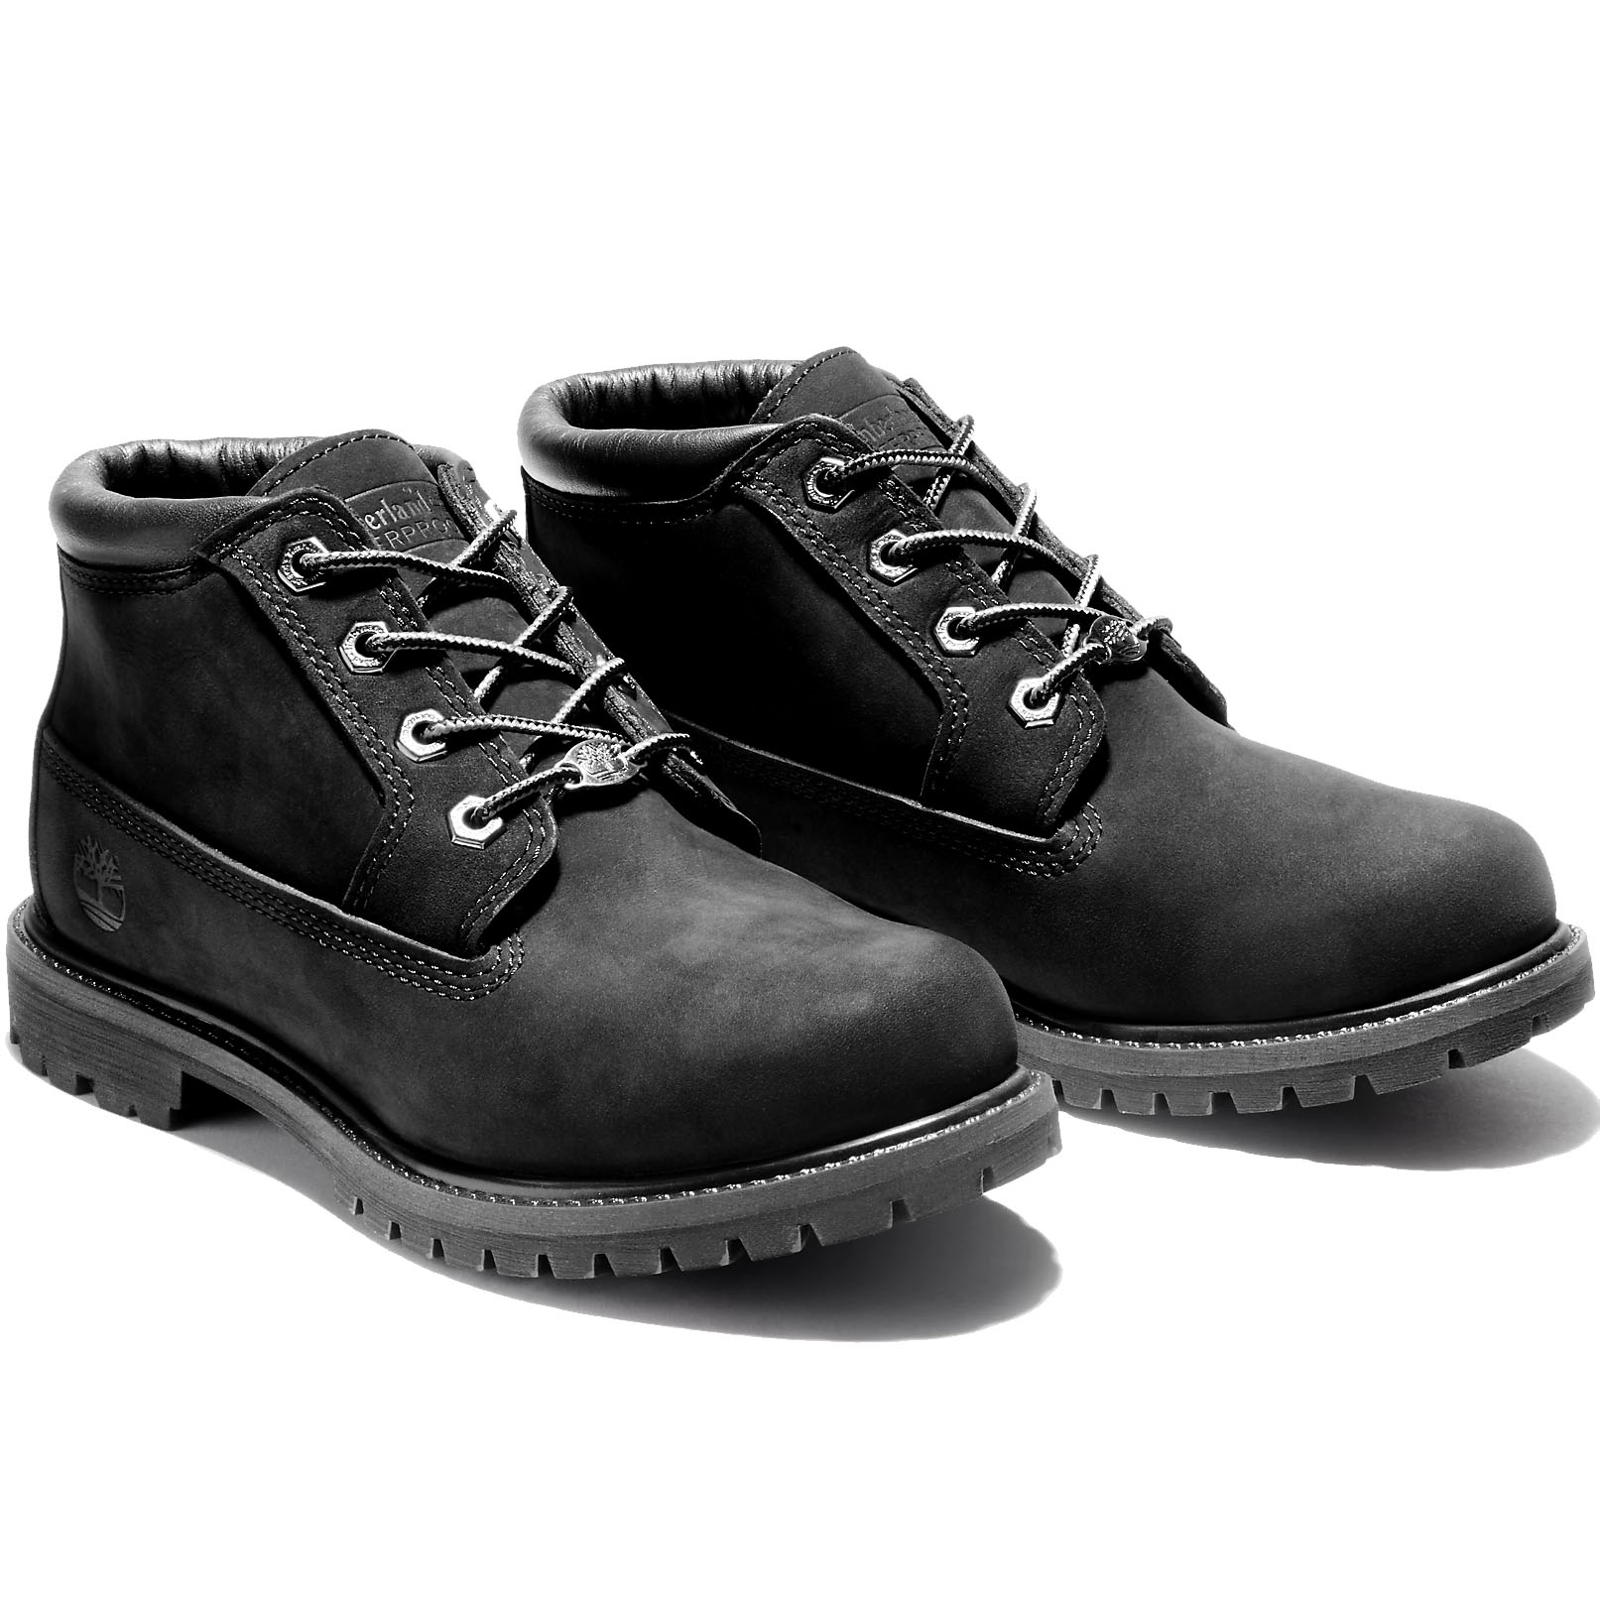 Timberland Women's Nellie Waterproof Desert Chukka Ankle Boots - UK 4